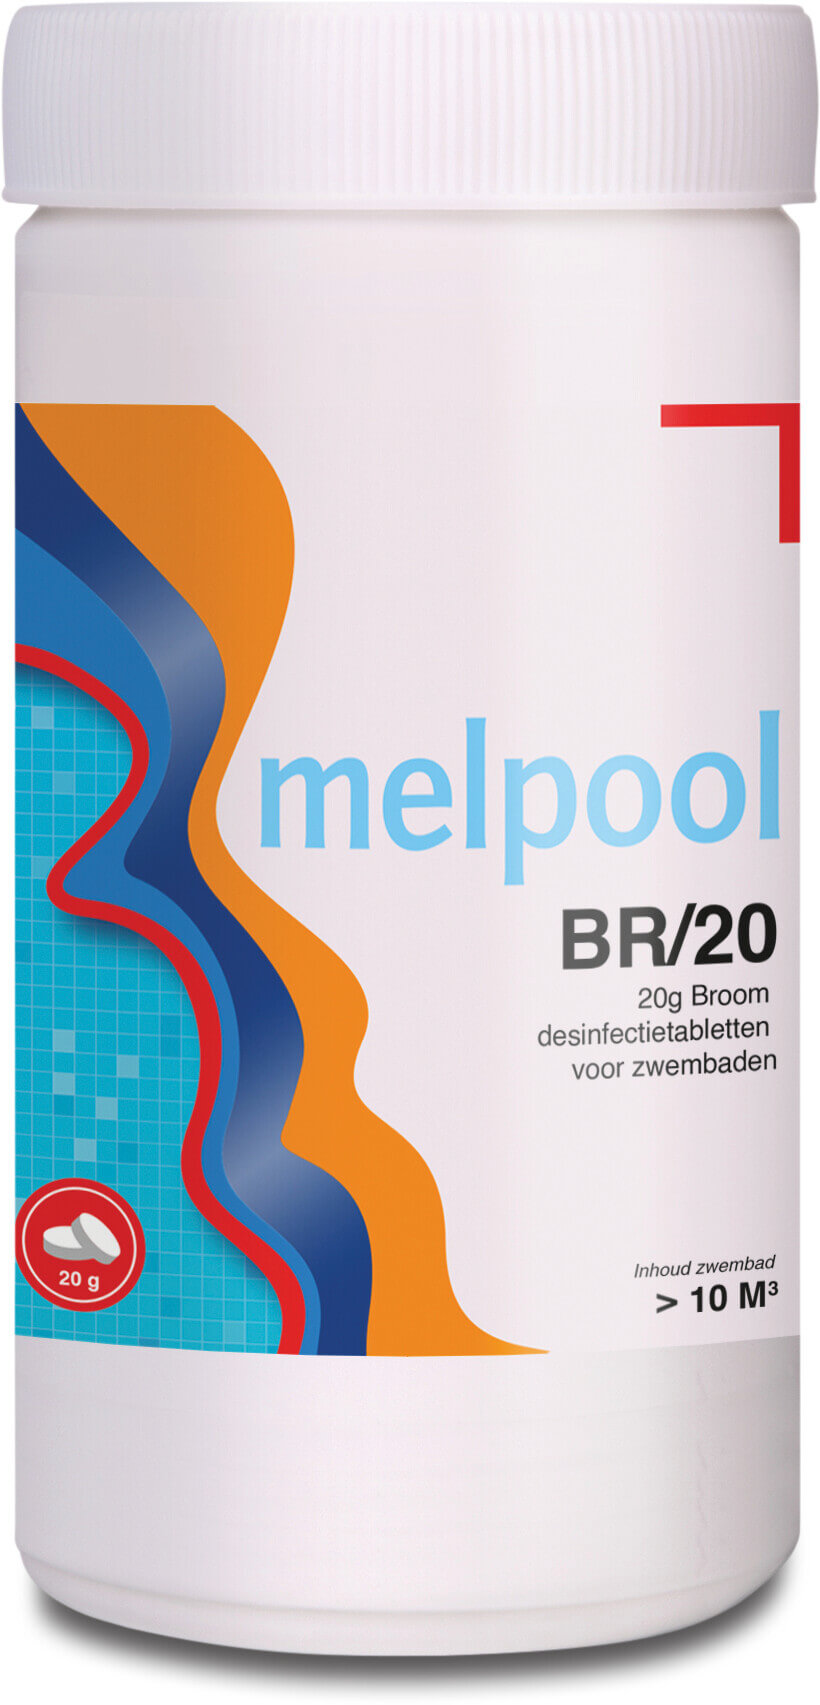 Melpool BR/20 1-Brom-3-klor-5,5-dimethylhydantoin 1000g type 20g tablet